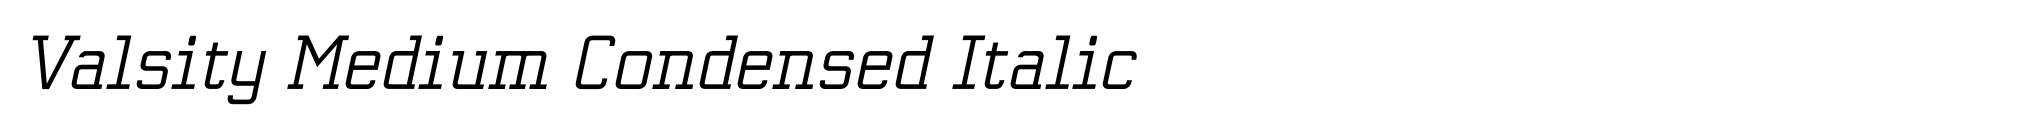 Valsity Medium Condensed Italic image